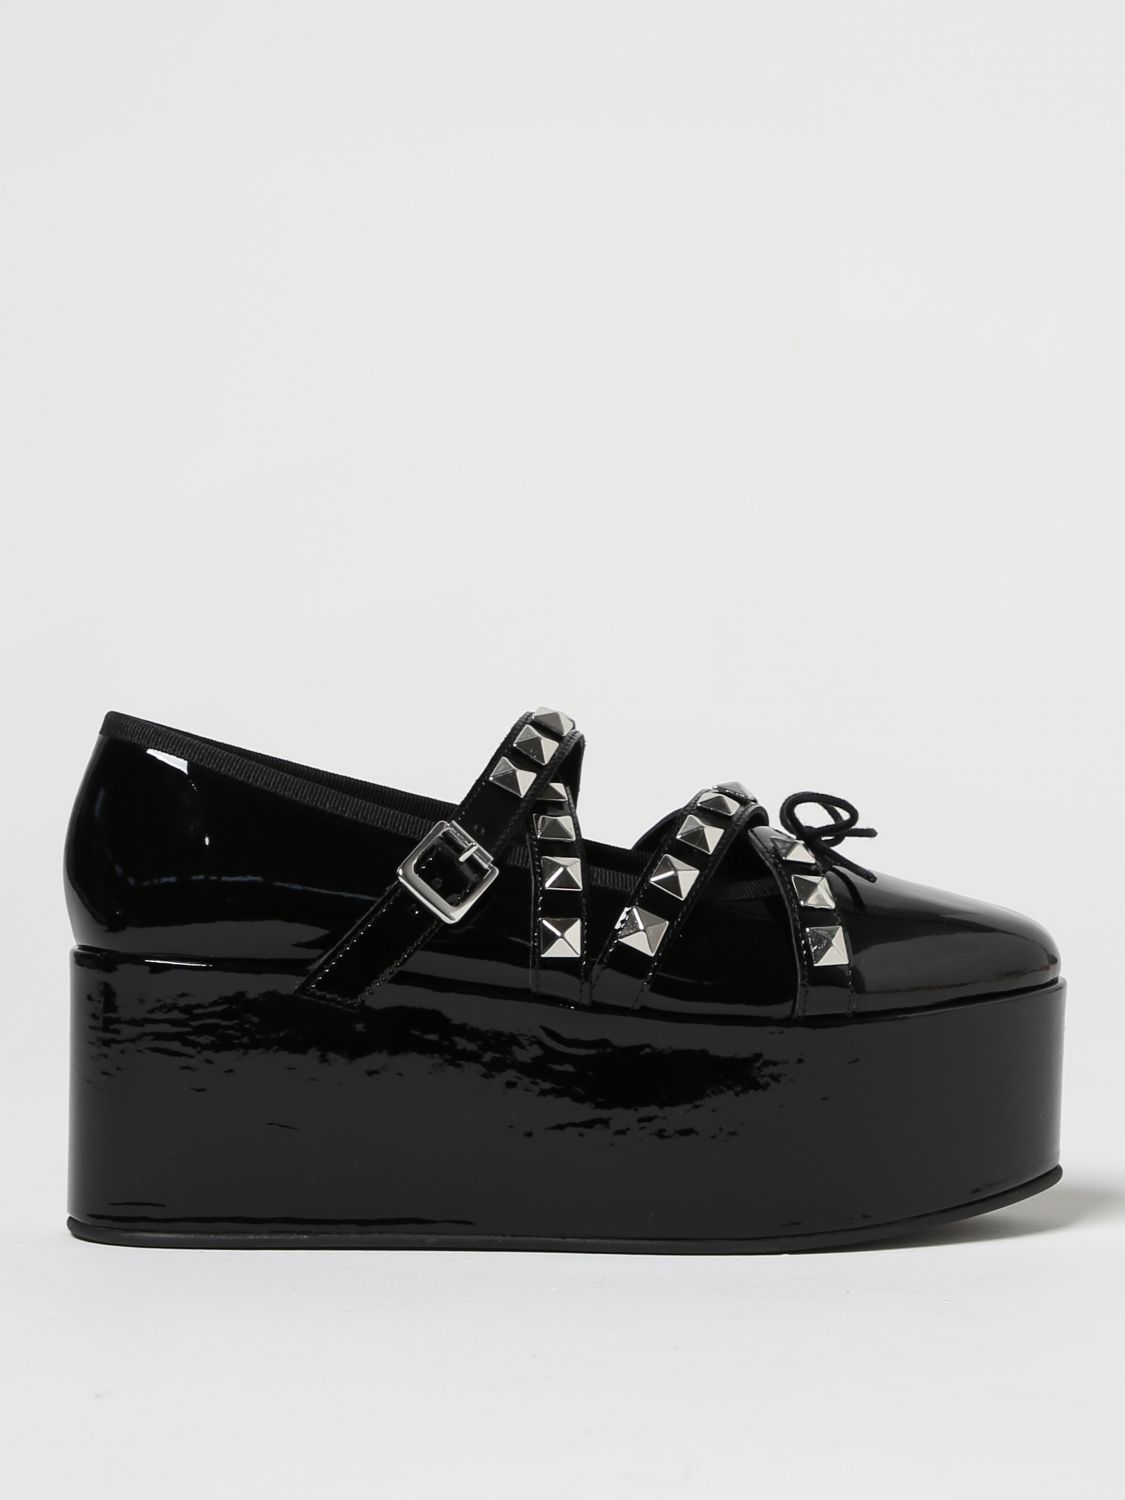 Noir Kei Ninomiya Wedge Shoes NOIR KEI NINOMIYA Woman colour Black